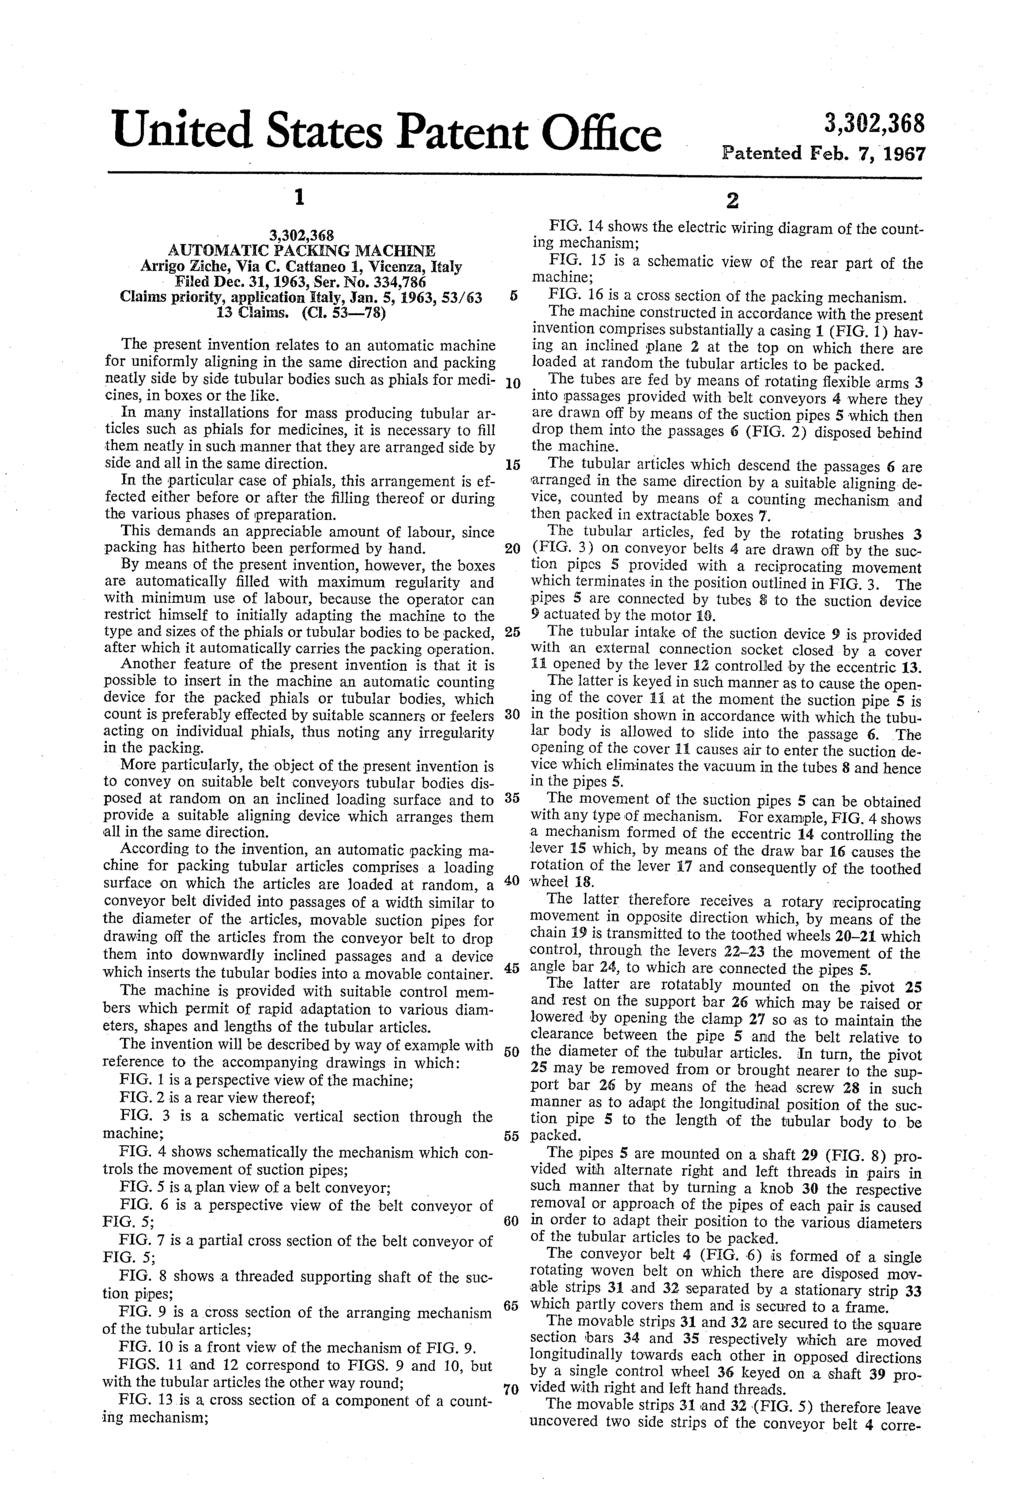 United States Patent Office Patented Feb. 7, 1967 1. AUTOMATIC PACKENG MACHINE Filed Dec. 31, 1963, Ser. No. 334,786 Arrigo Ziche, Via C.